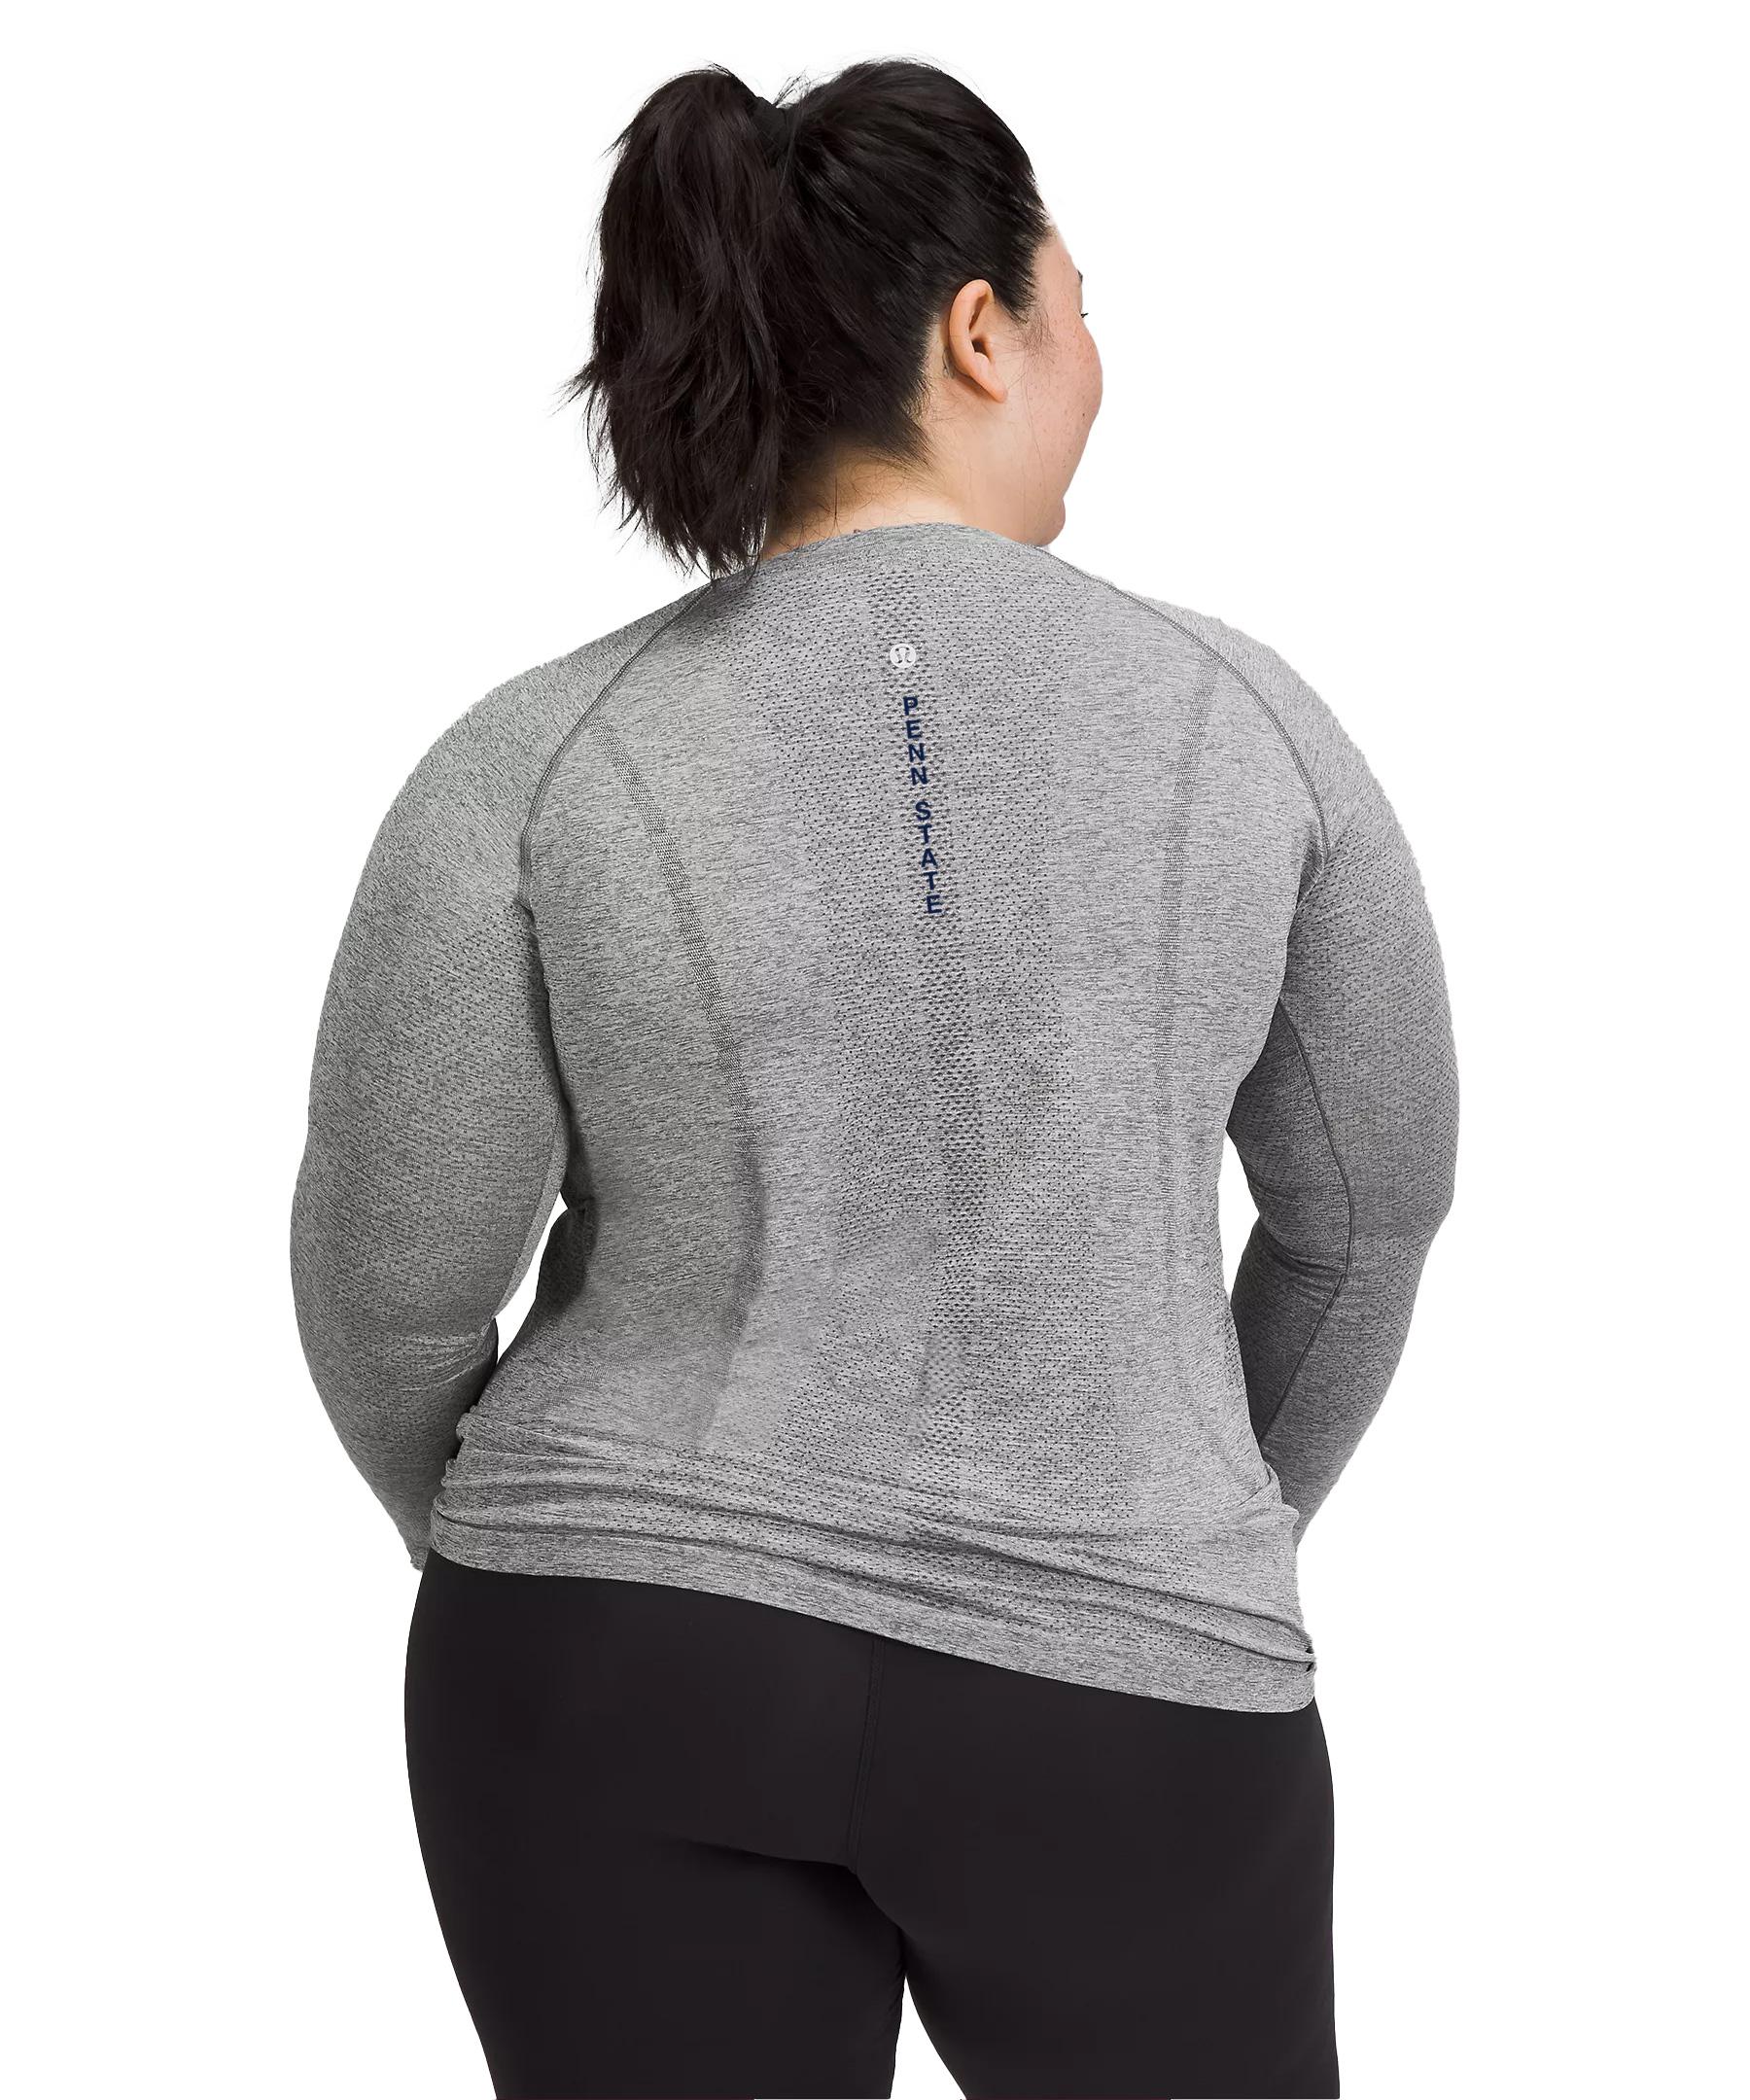 Penn State lululemon Women's Swiftly Tech 2.0 Long Sleeve Shirt